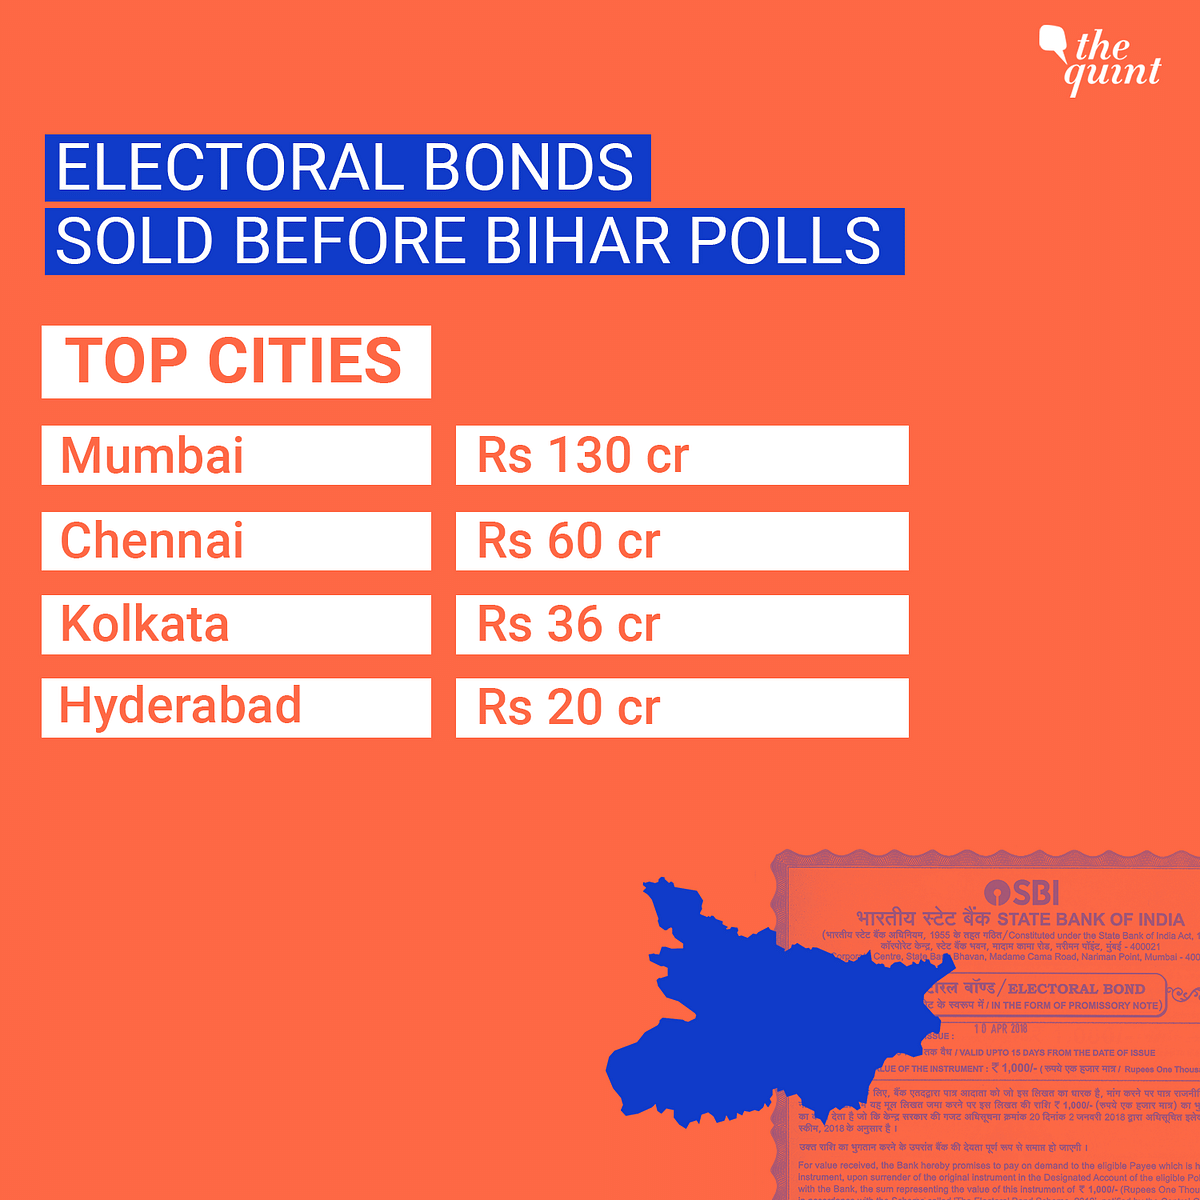  RTI reveals, of Rs 282 crore, Rs 130 crore worth electoral bonds were sold in Mumbai SBI branch before Bihar polls.